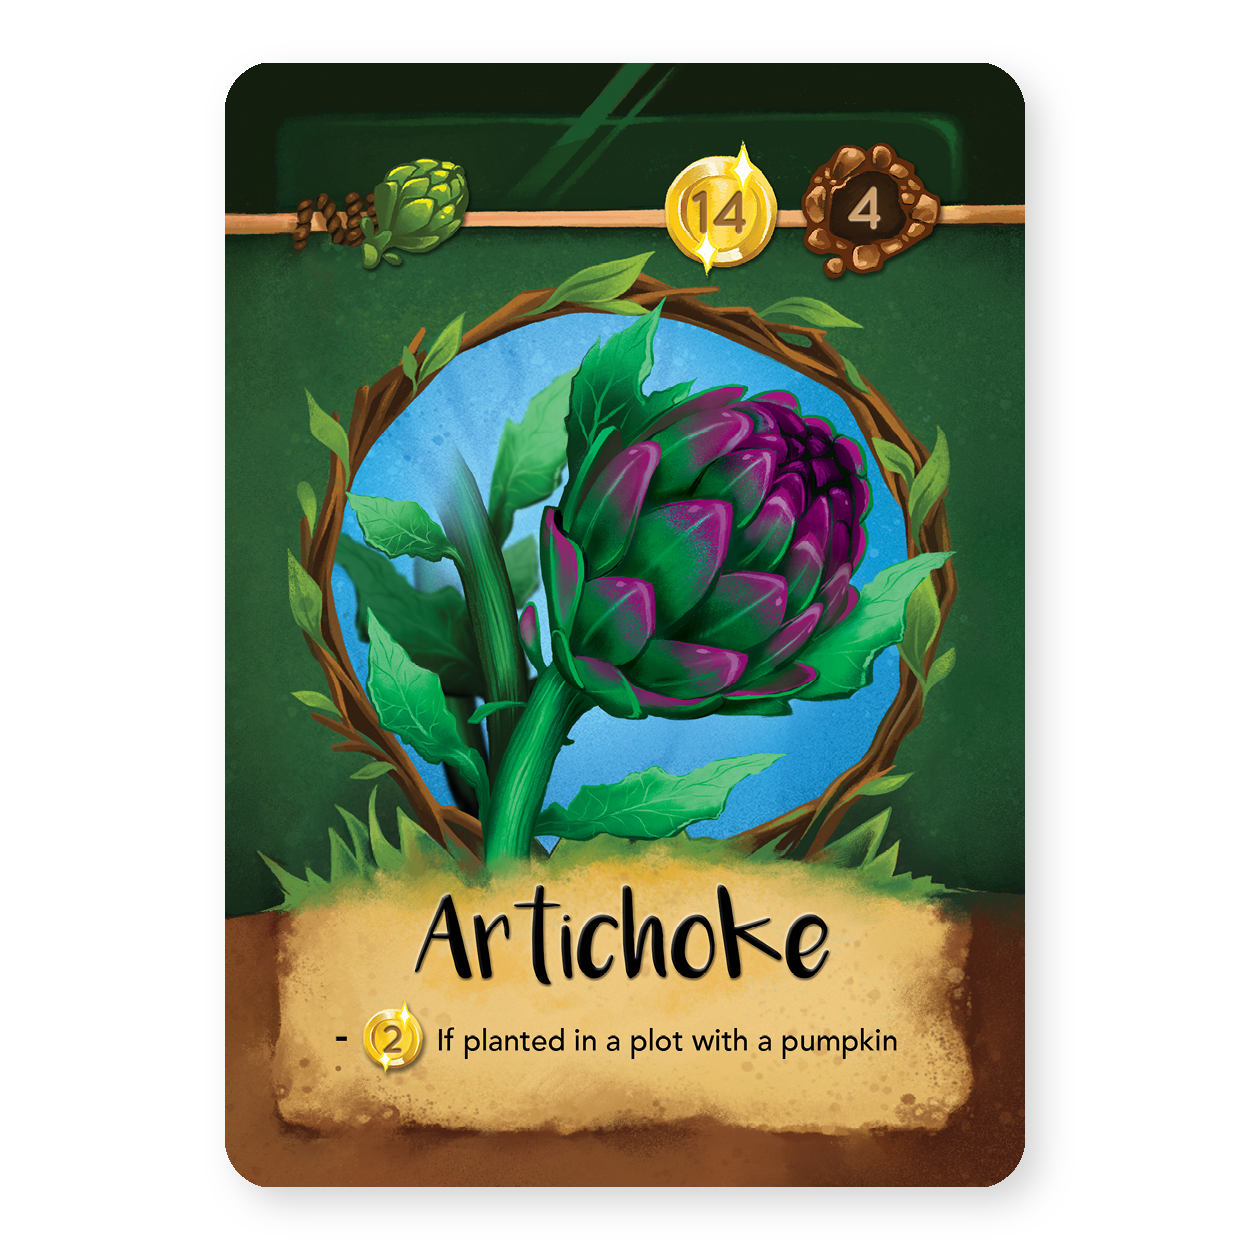 Artichoke from Plotalot Image courtesy of Moonstone Games